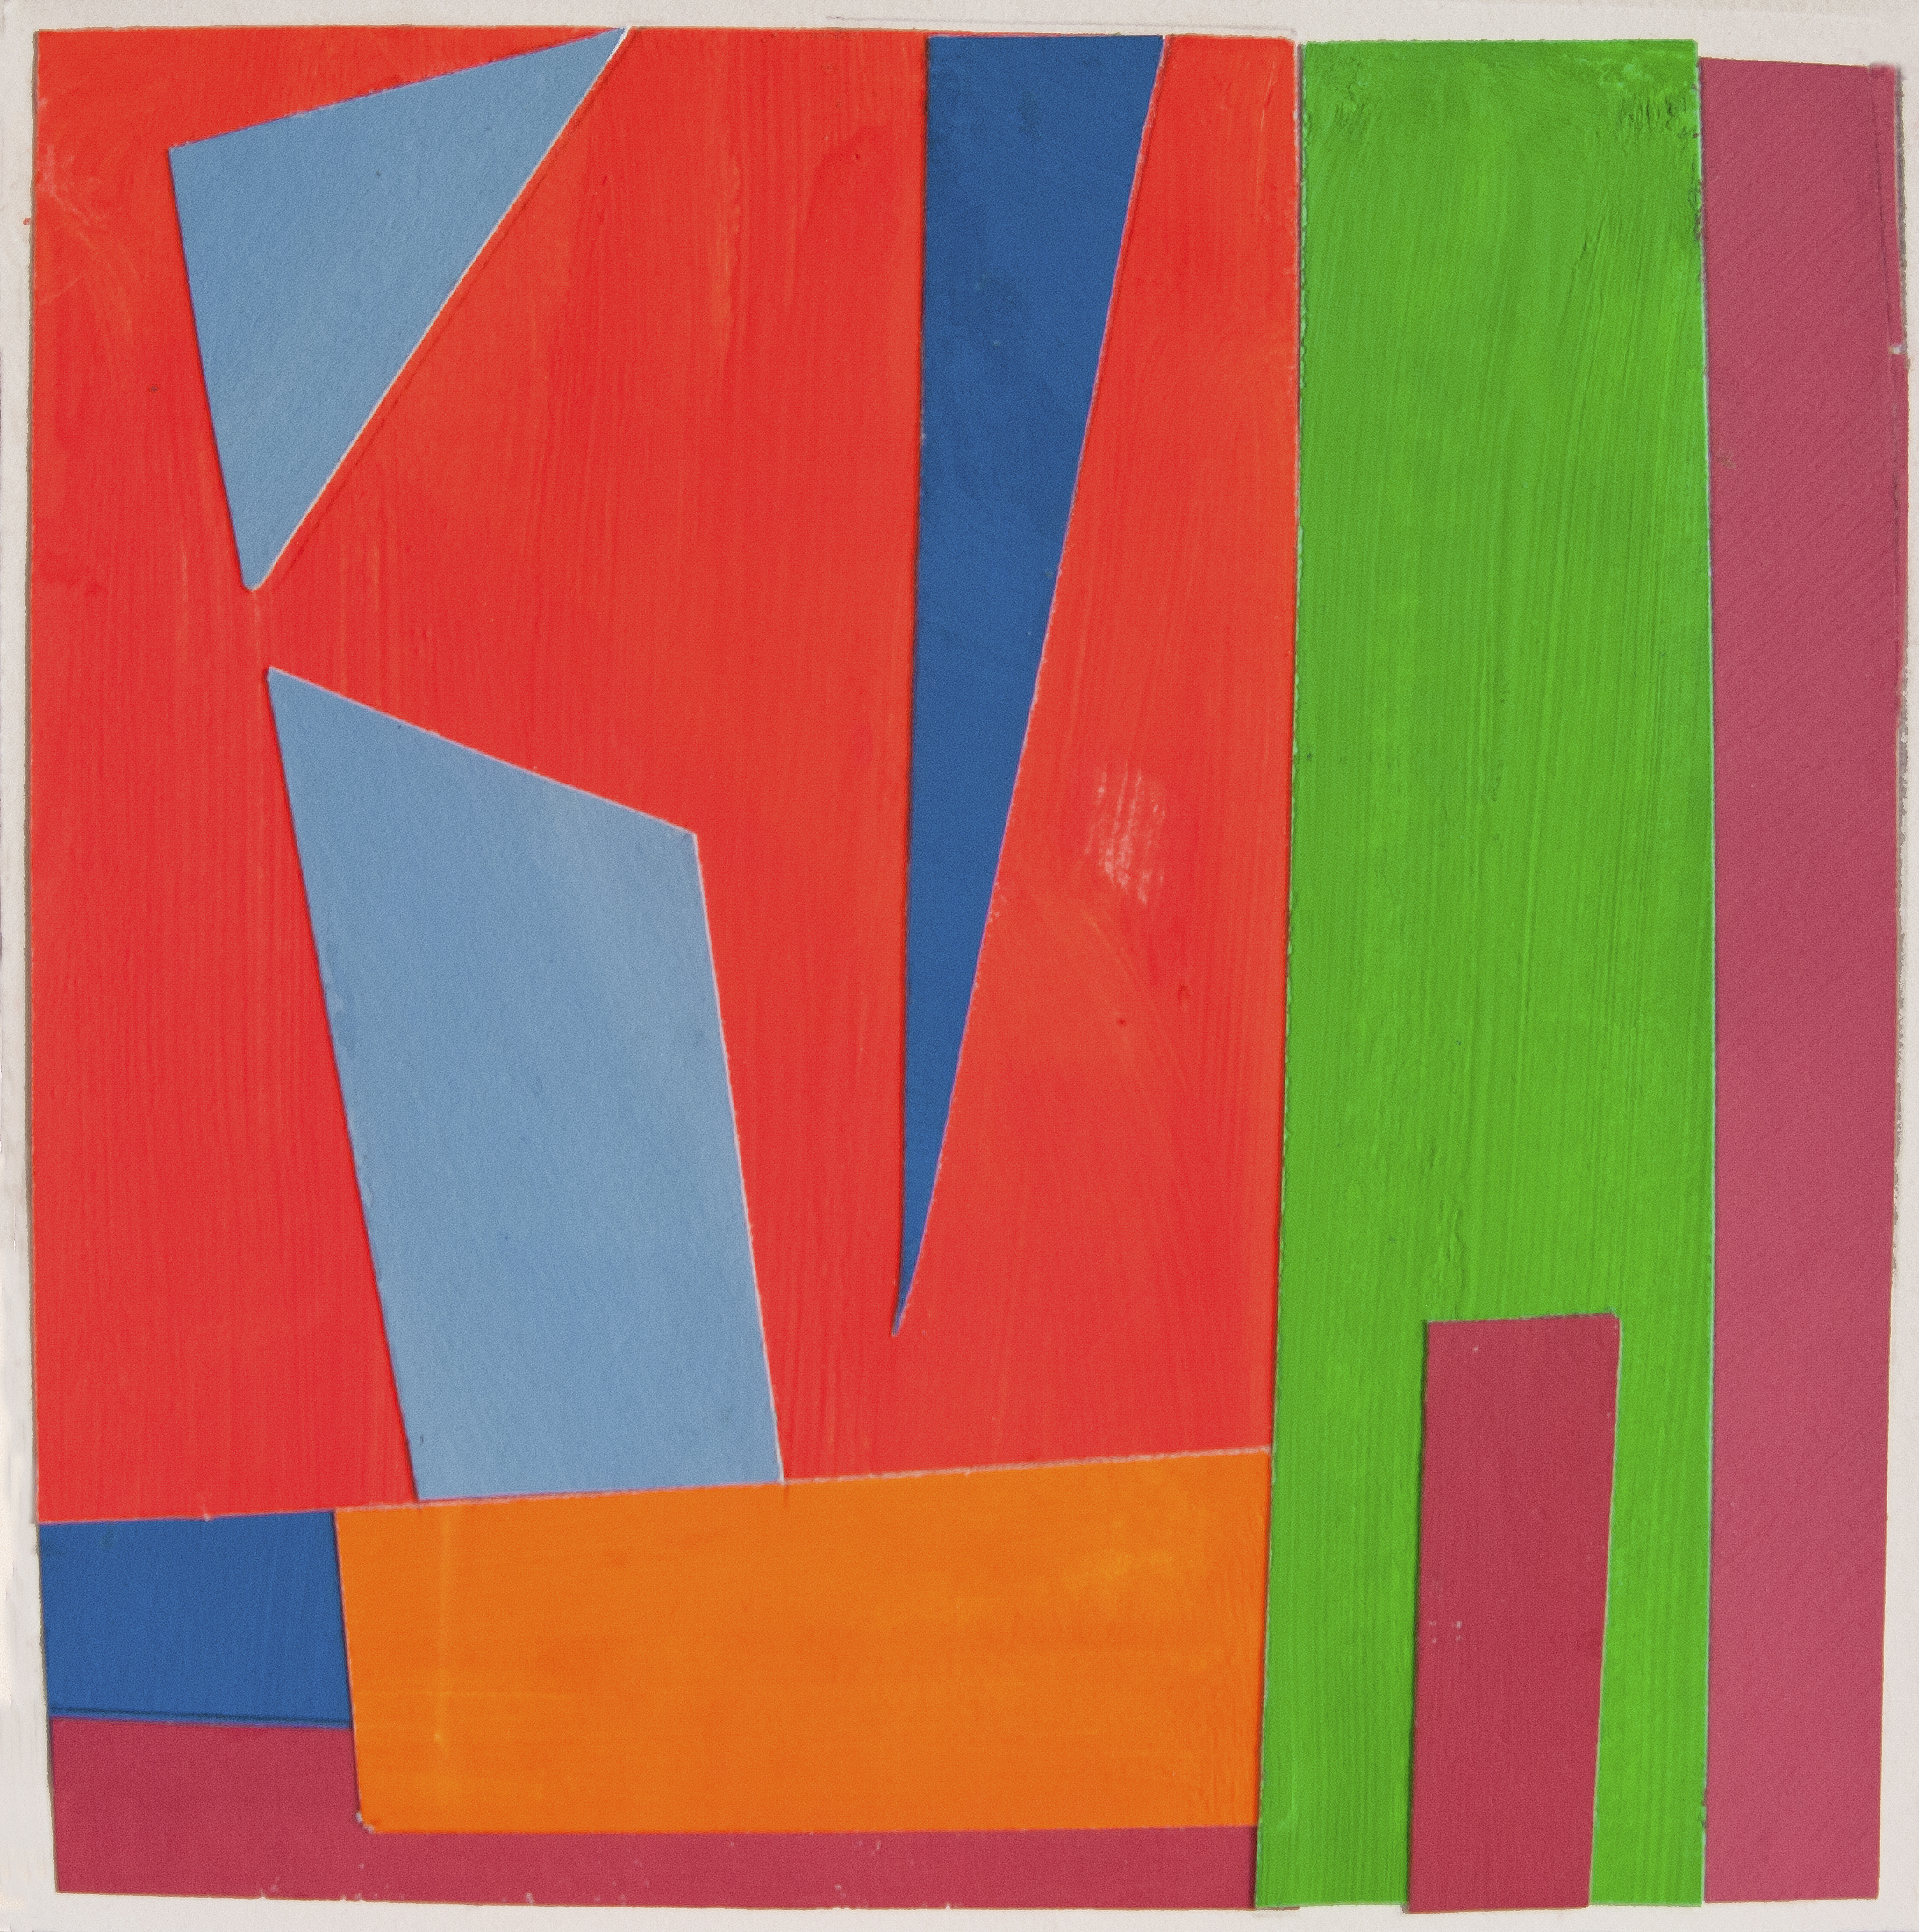    Cutout (red, blue, green),   gouache lumi colors, 6 x 6 in, 2016 